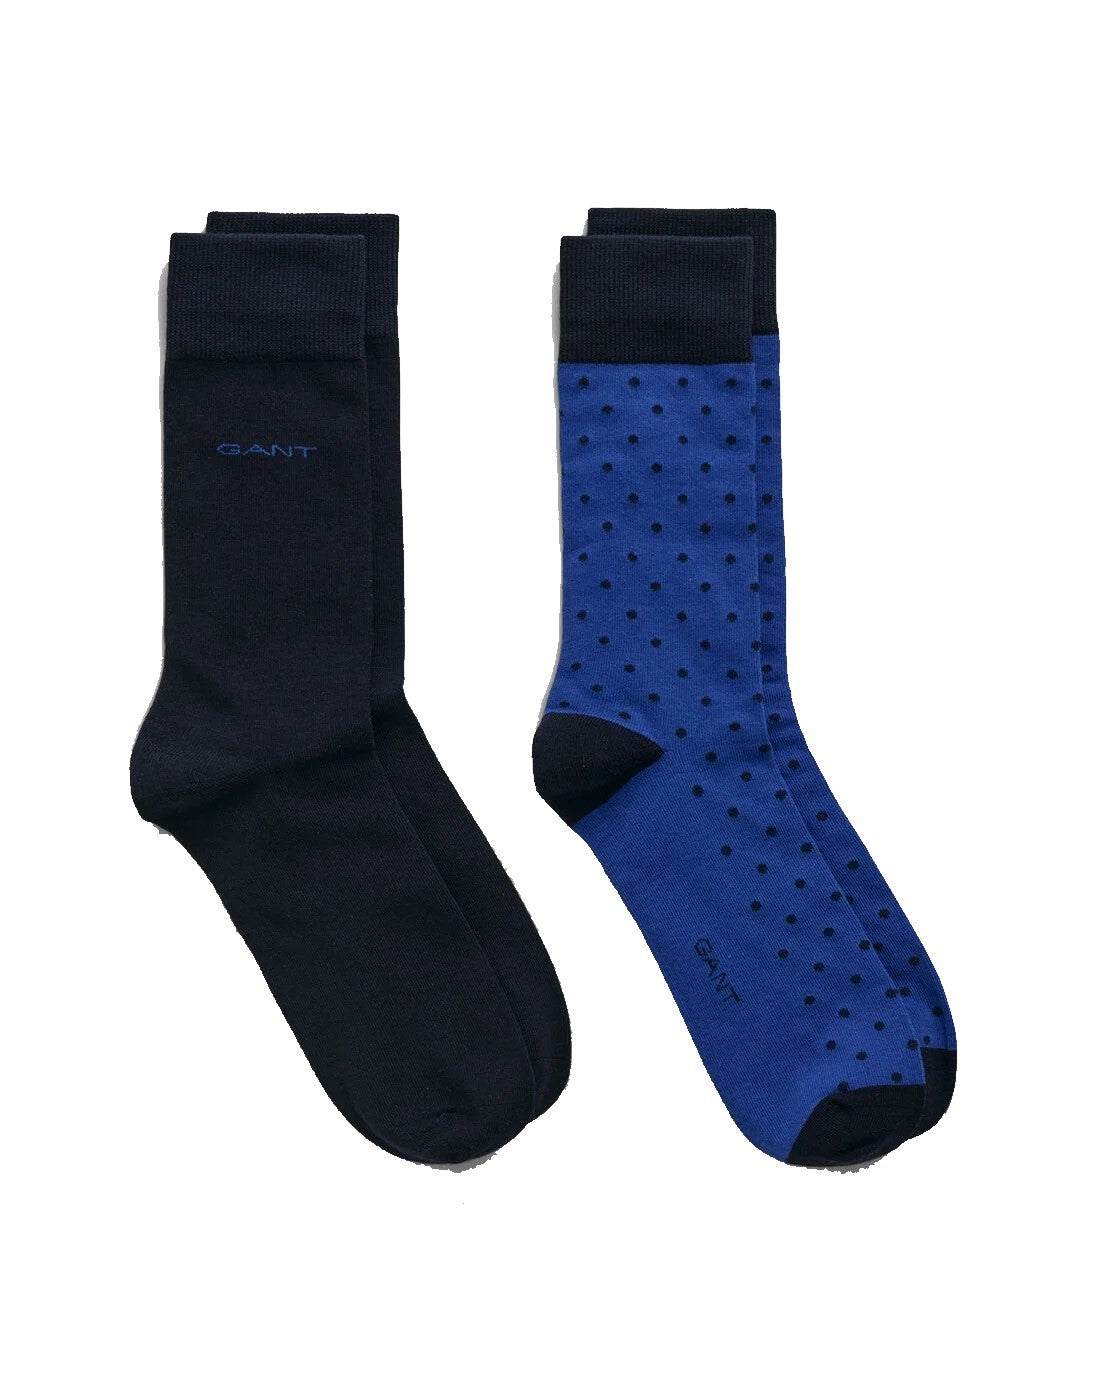 Gant Polka Dot And Solid Socks Blue